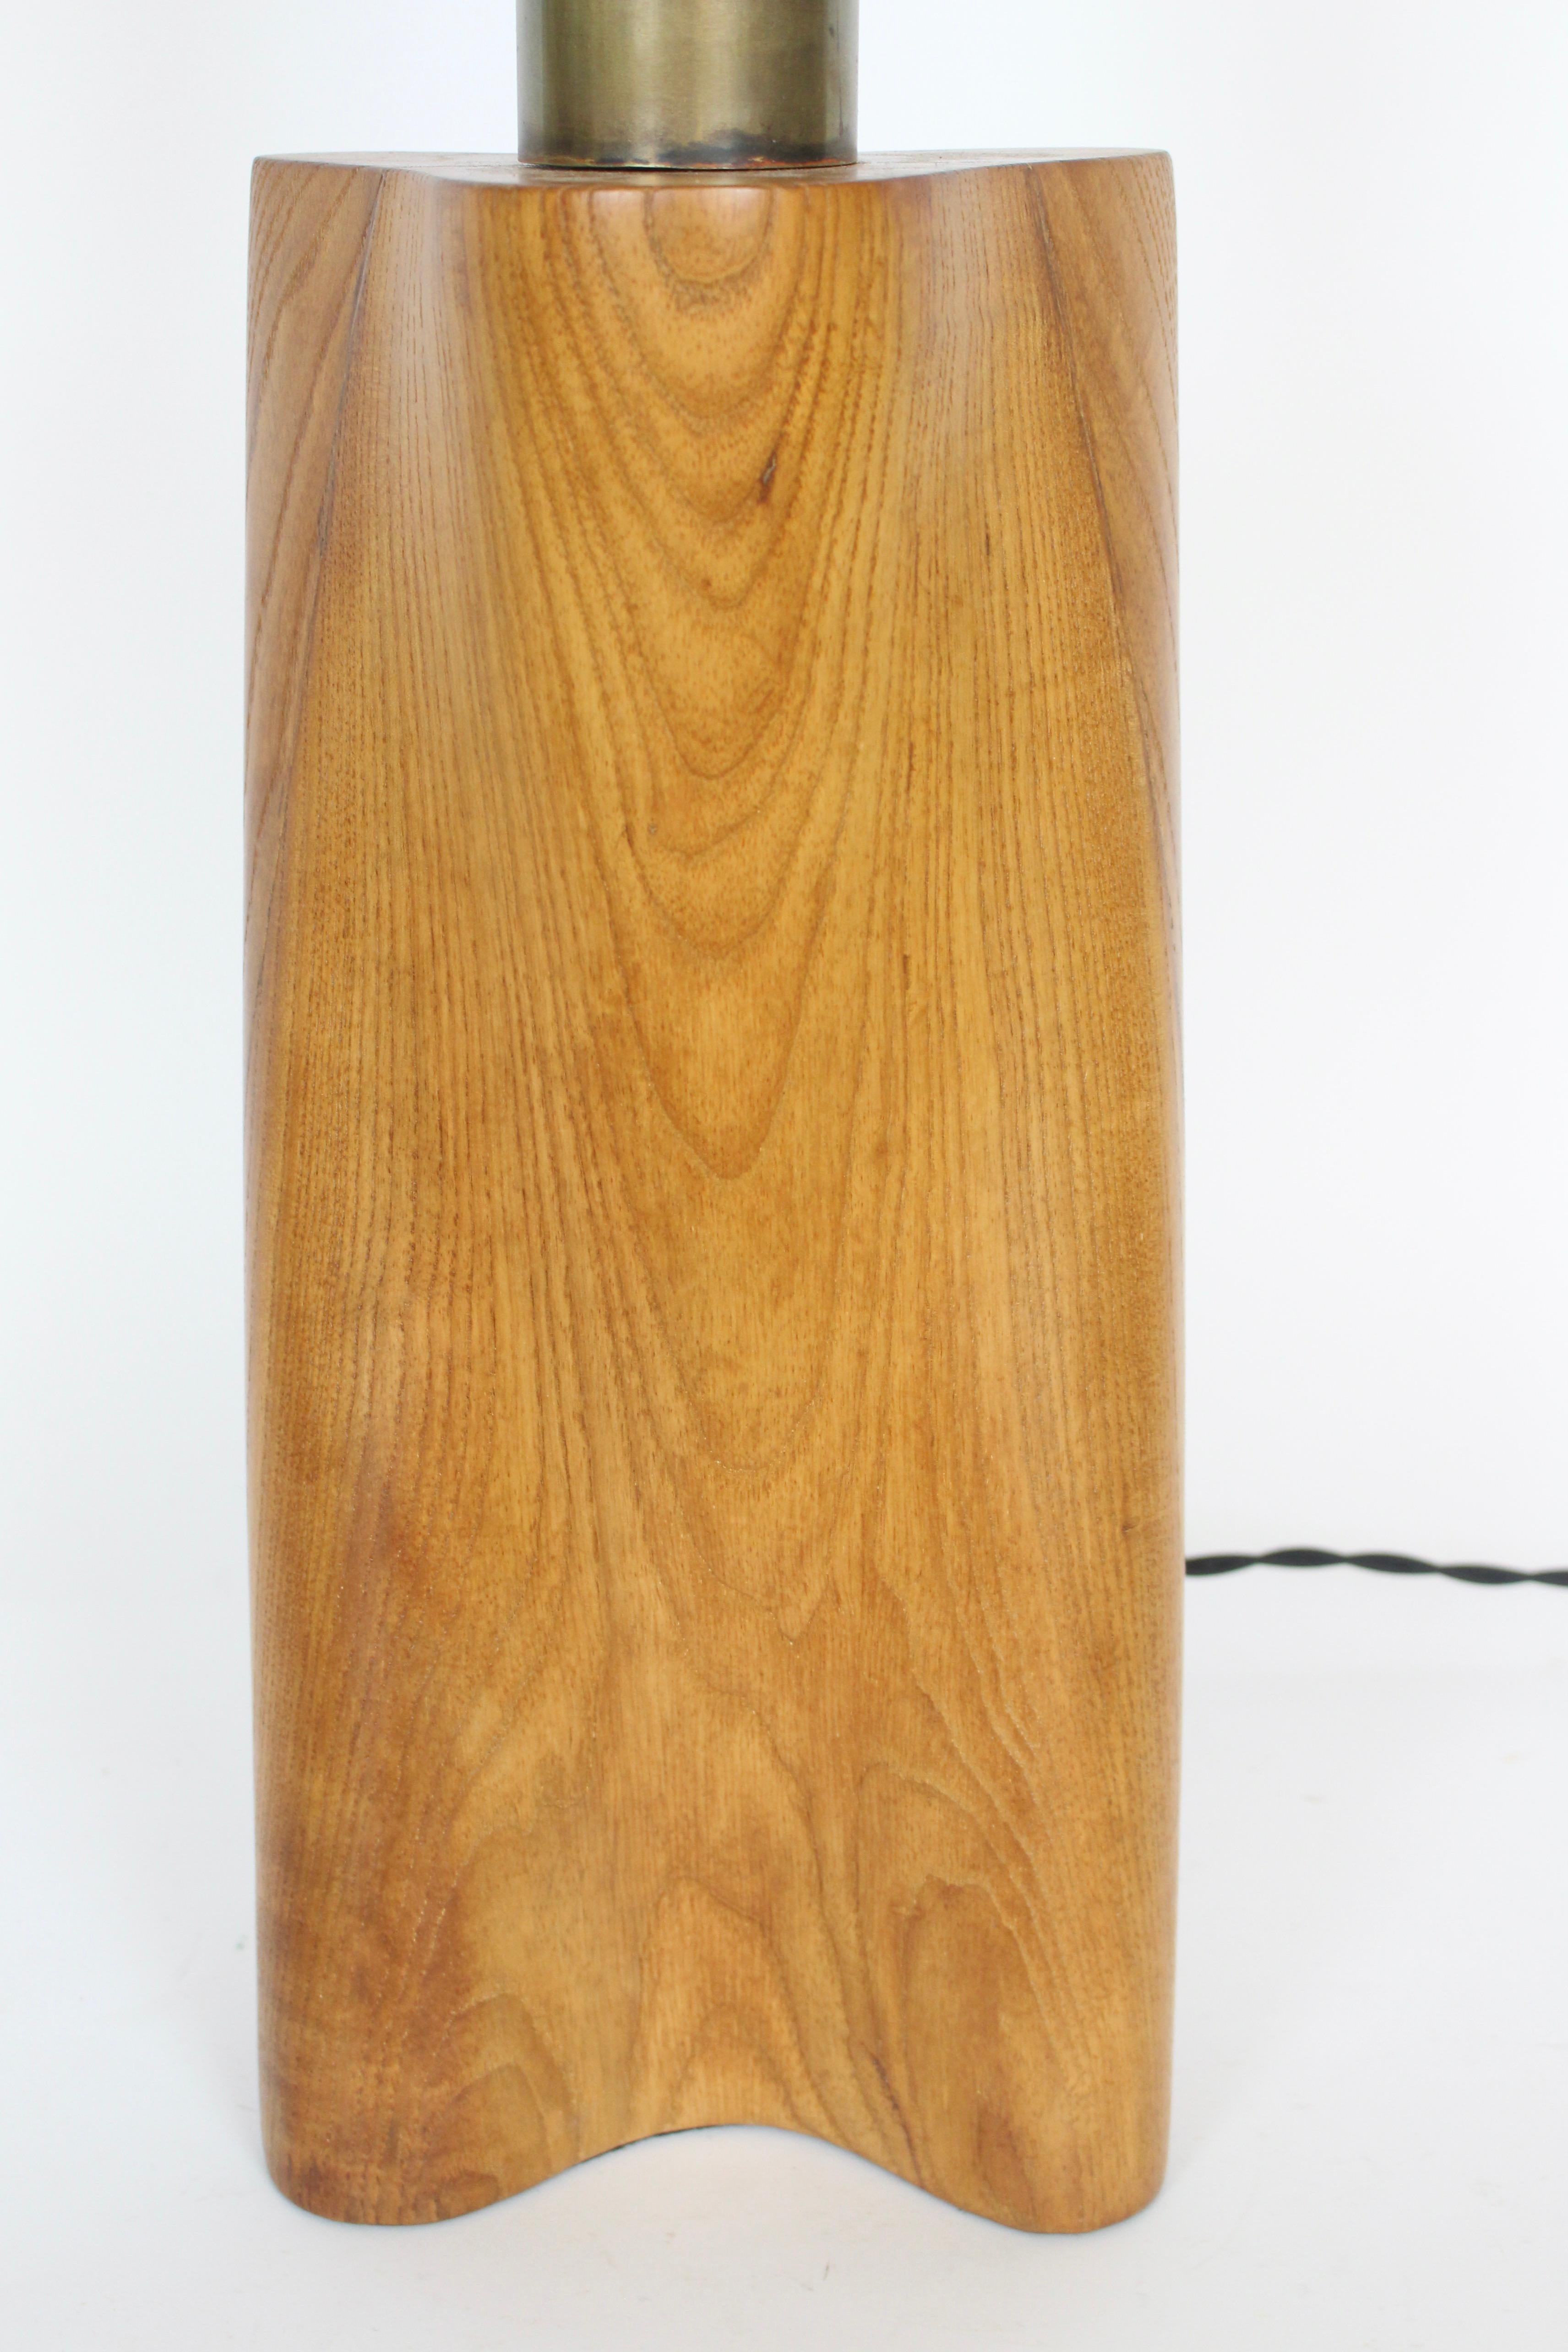 Yasha Heifetz Biomorphic Ash Table Lamp with Milk Glass Shade, 1940s For Sale 6